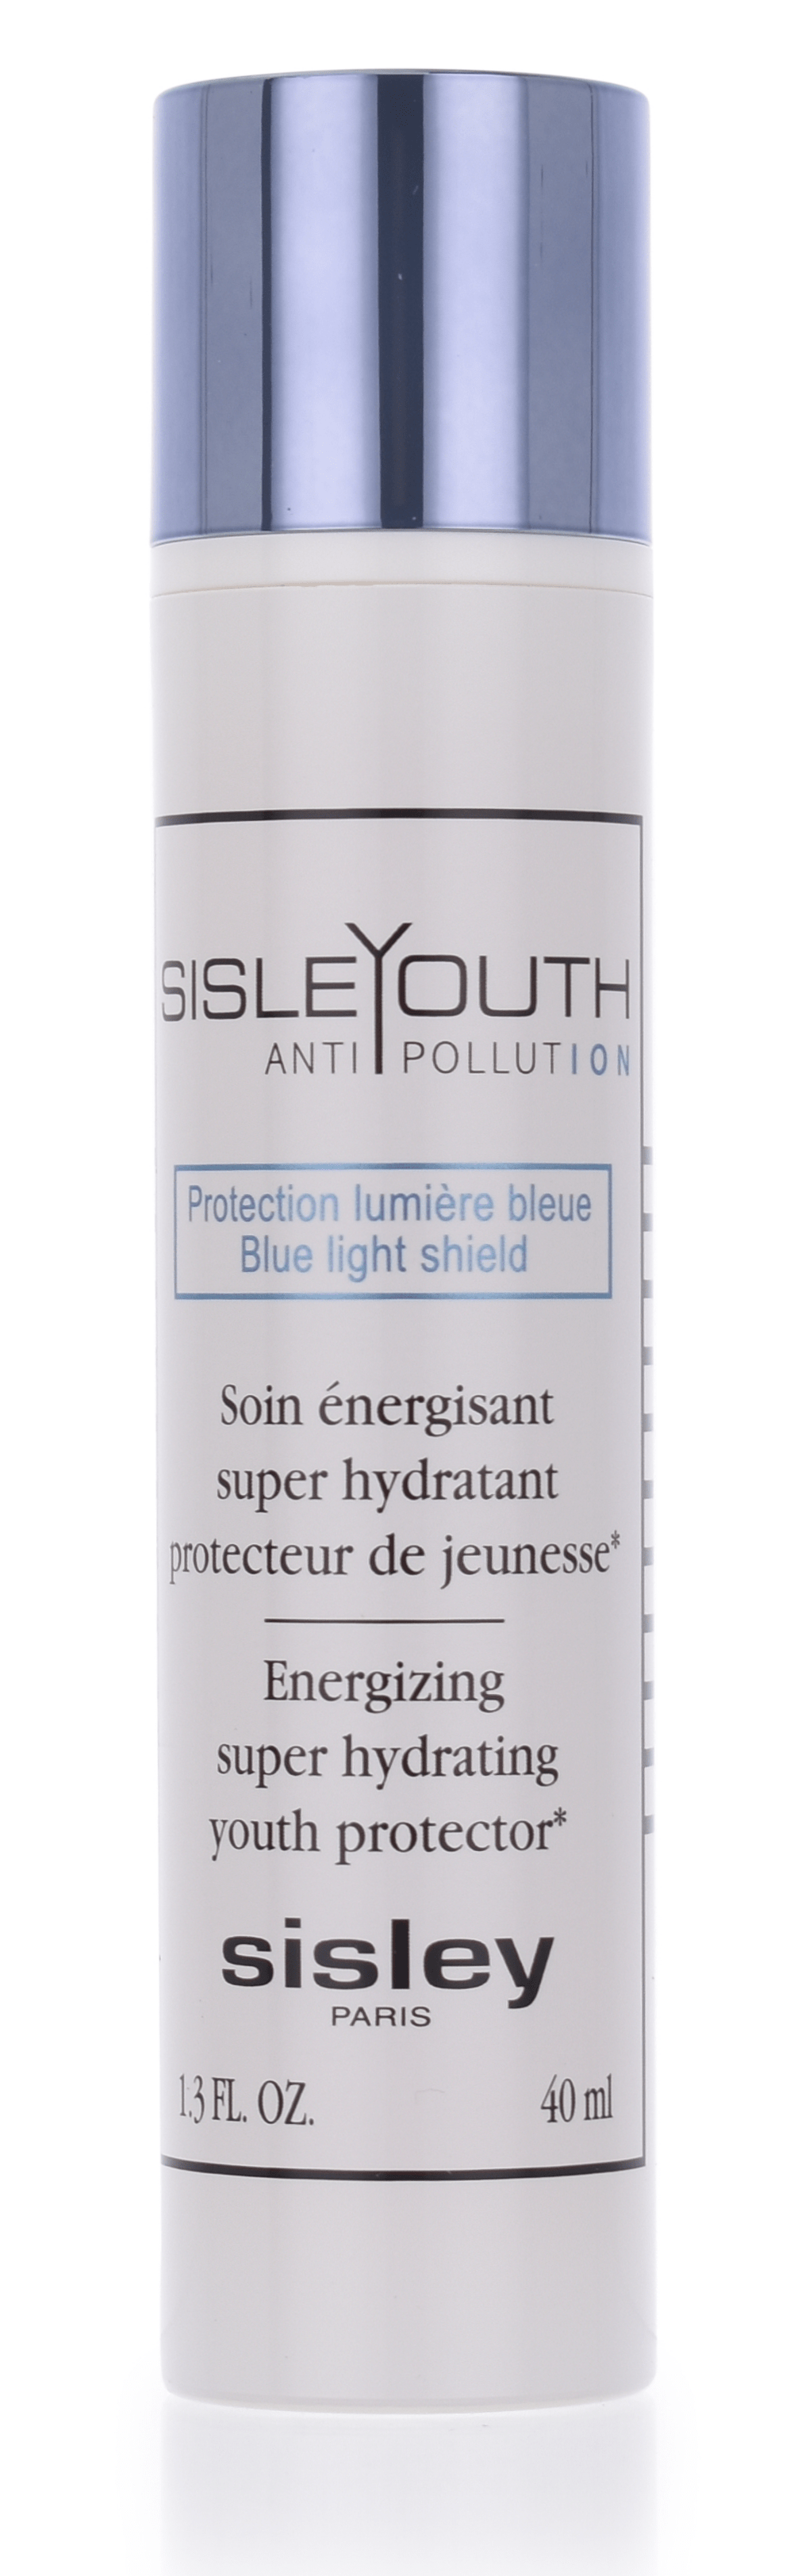 Sisley Sisleyouth Anti-Pollution 40 ml